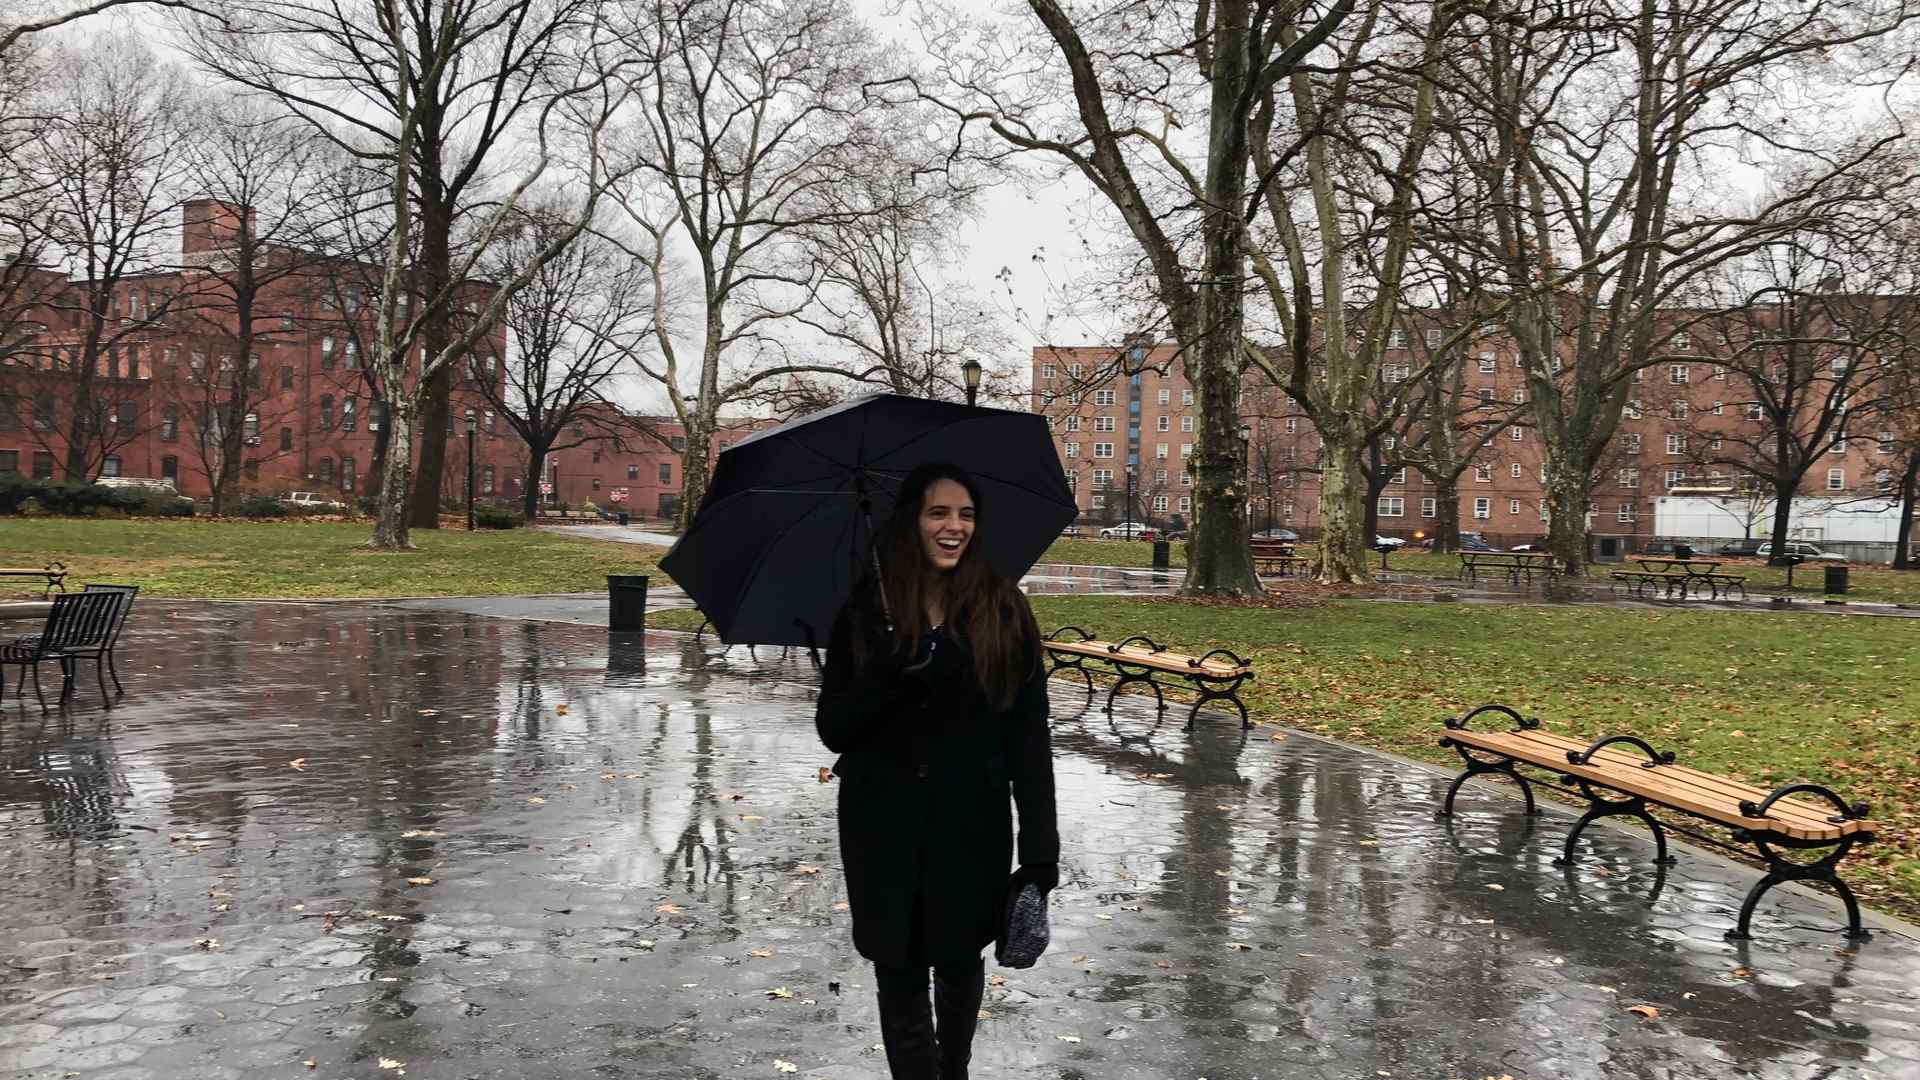 Gabriela stands on a rainy street